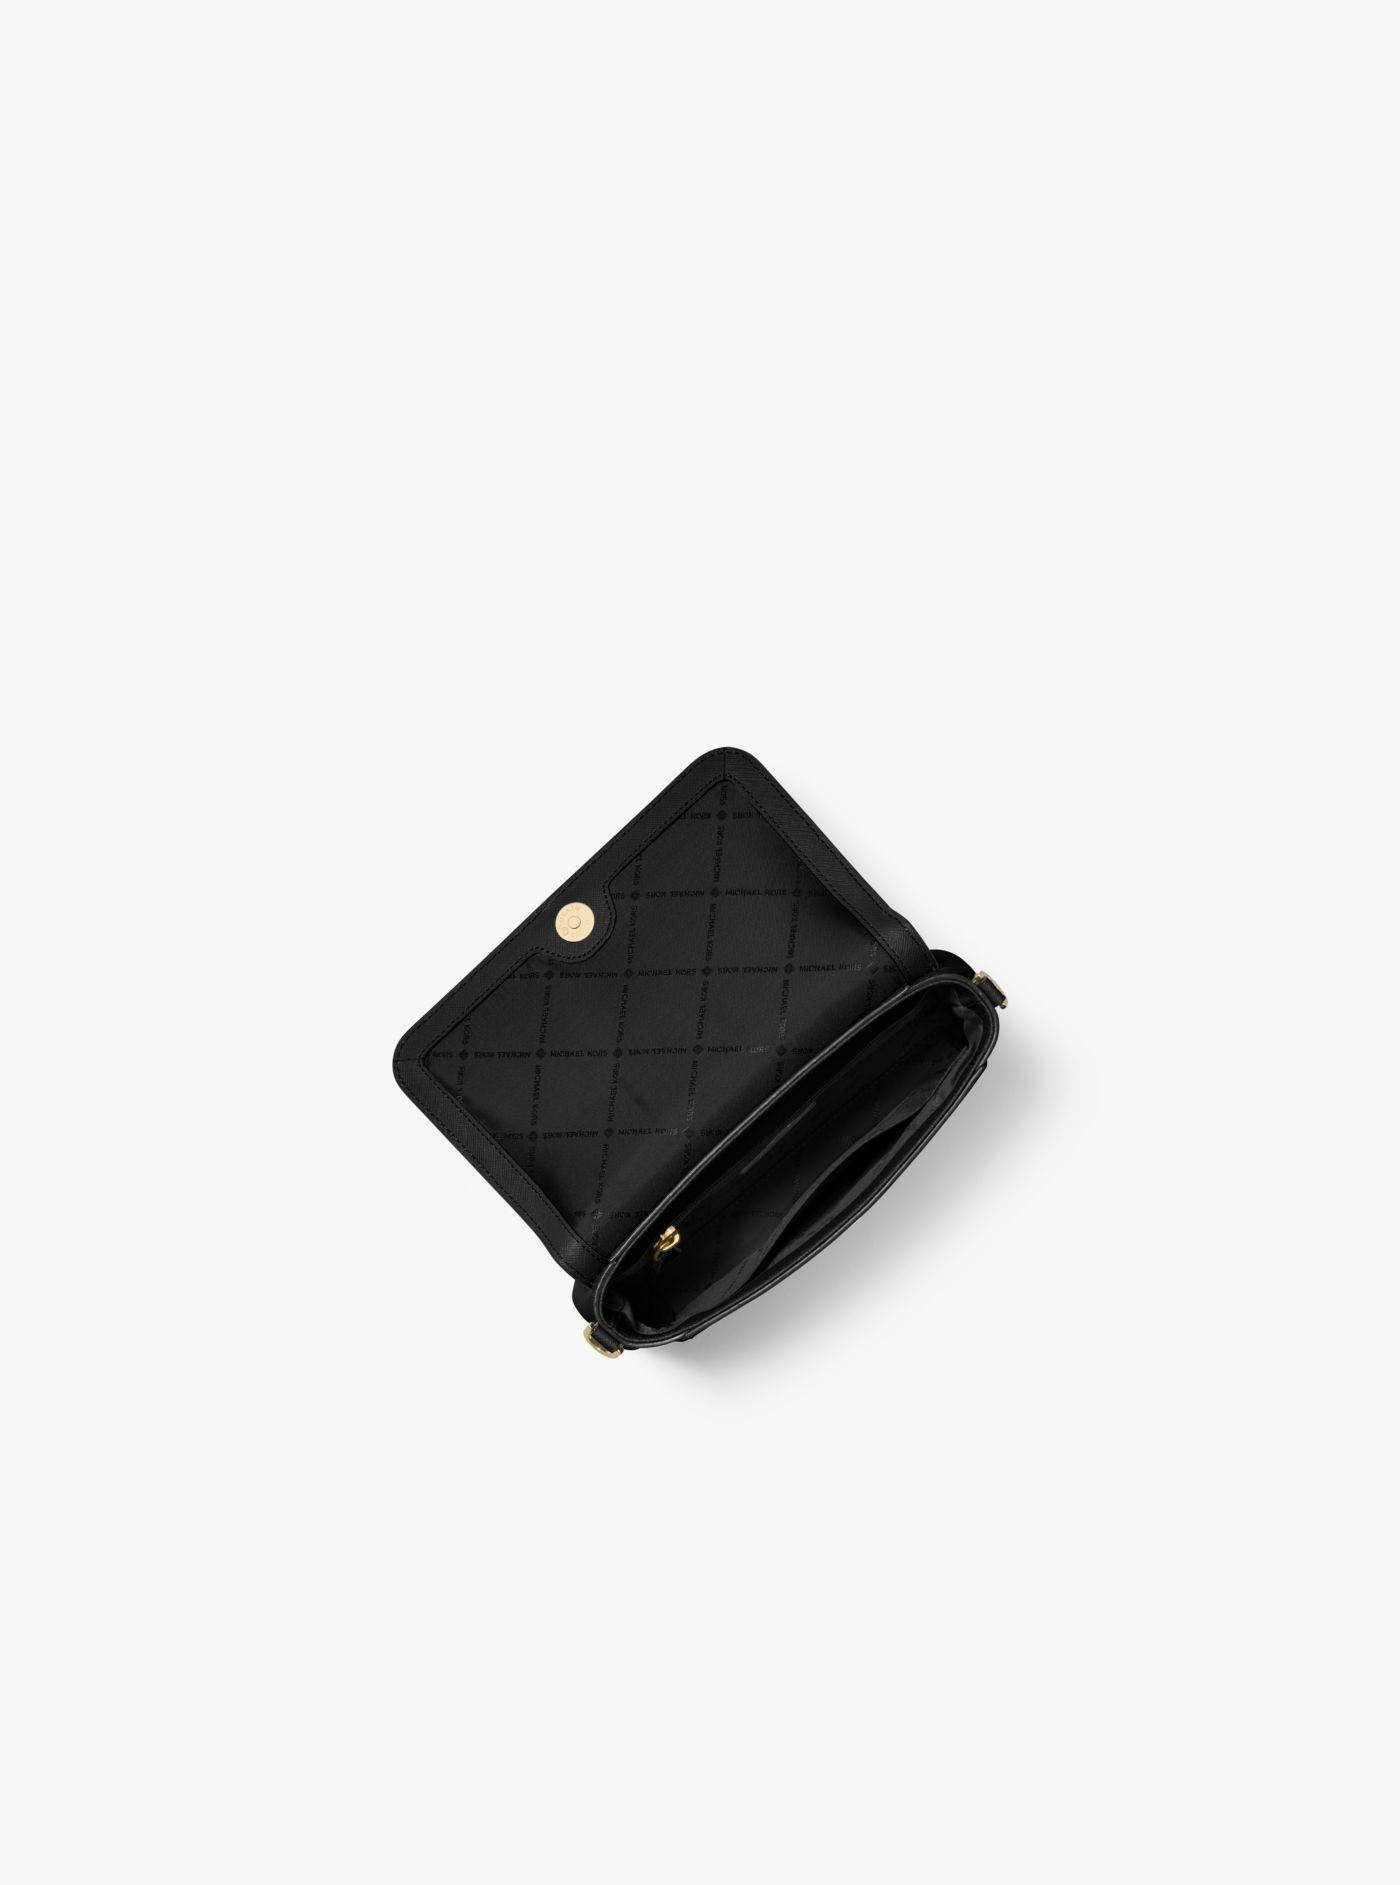 Michael Kors Medium Saffiano Leather Convertible Crossbody Bag in Black -  Lyst